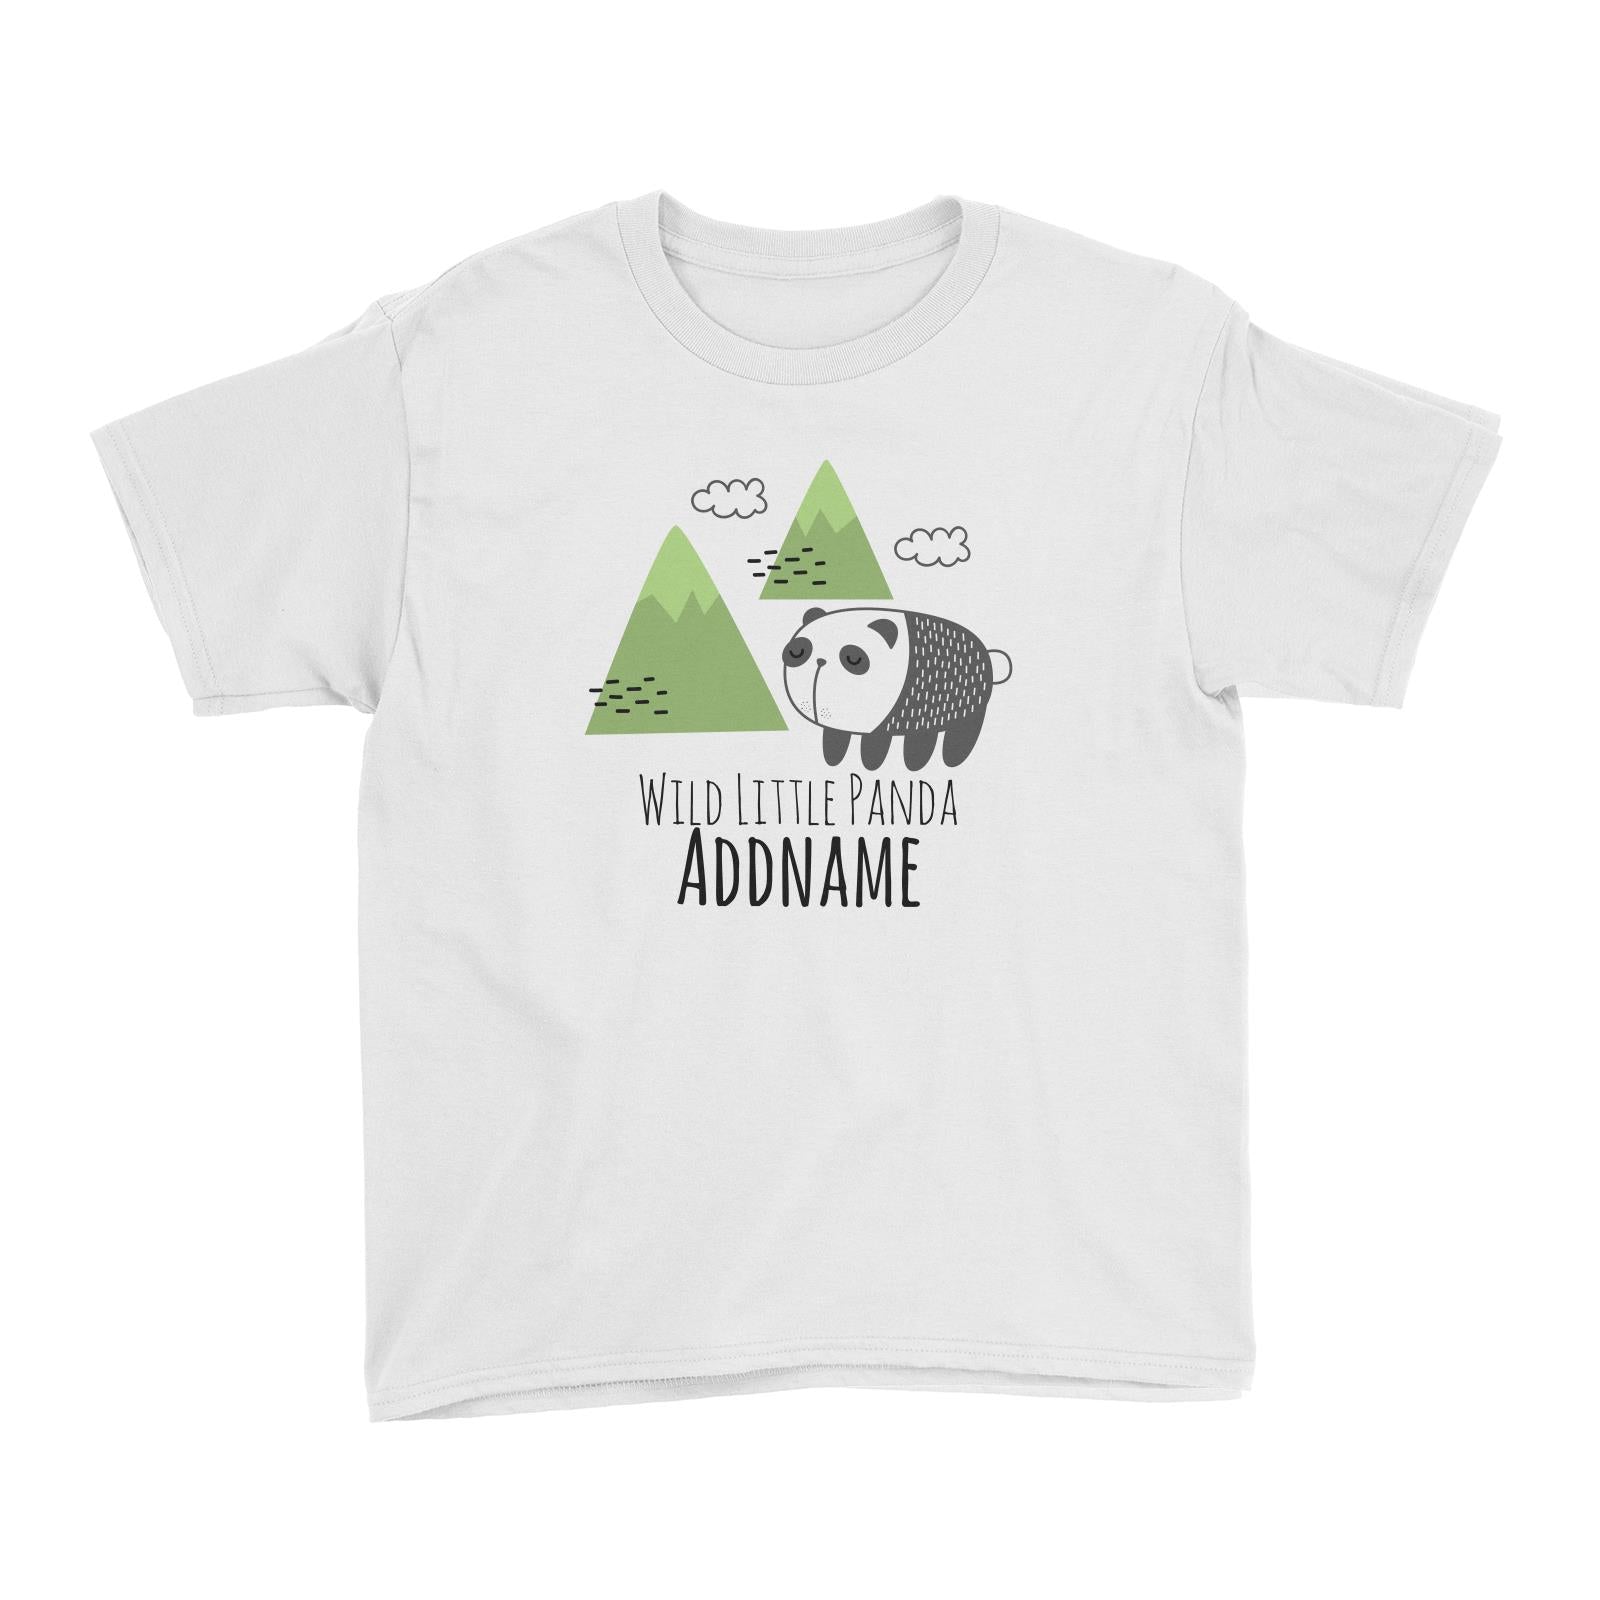 Drawn Adorable Animals Wild Little Panda Addname Kid's T-Shirt